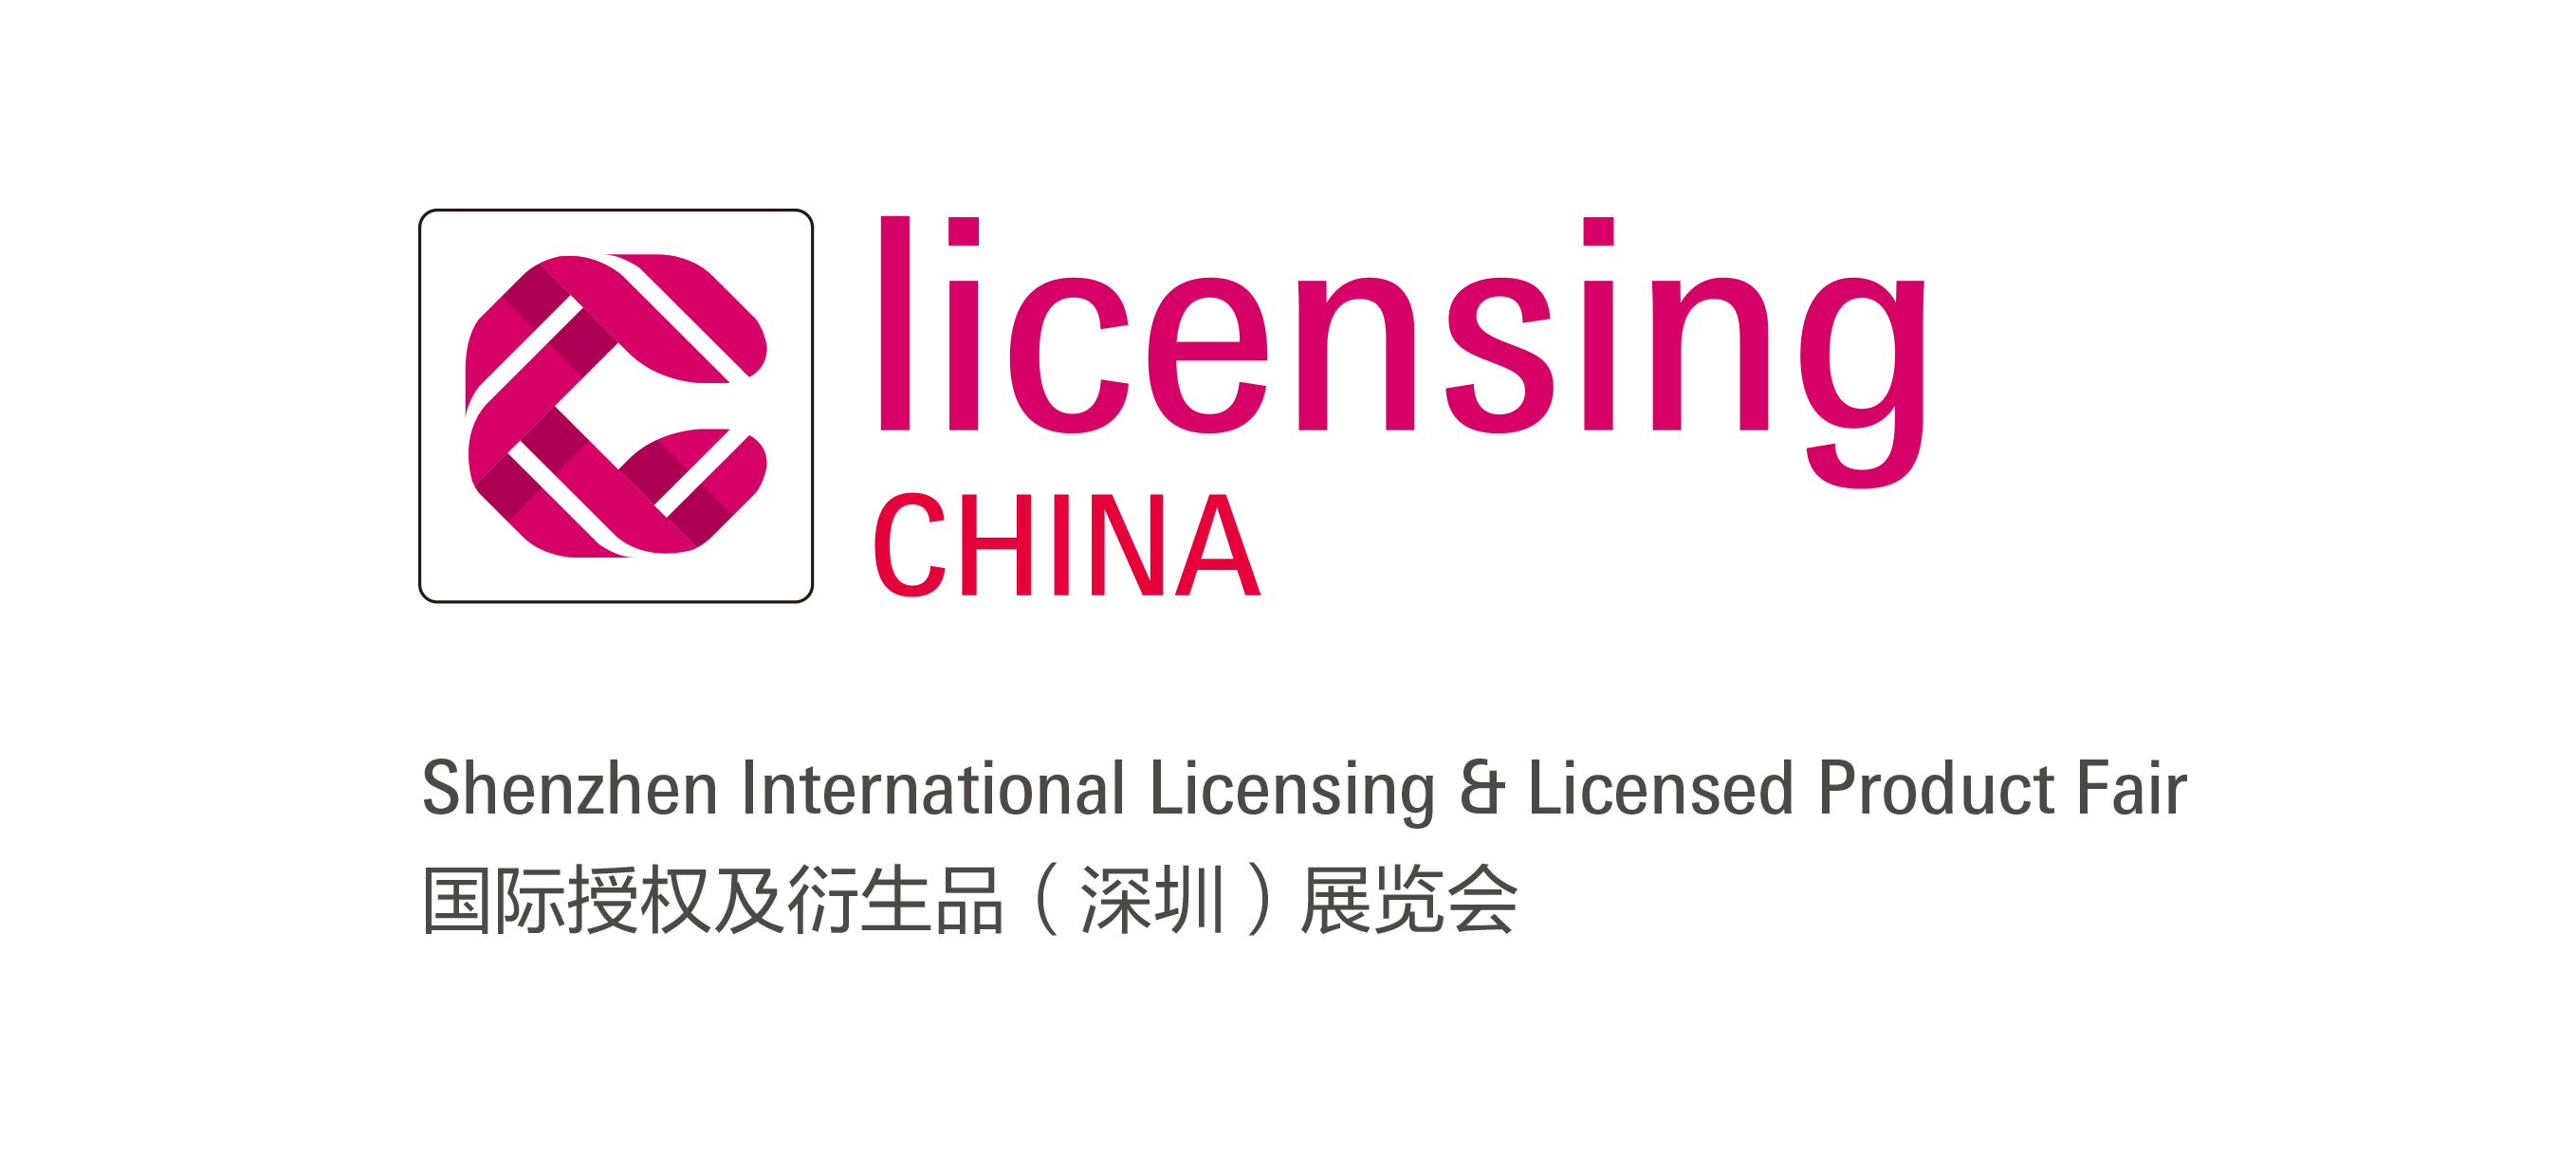 licensingLChina%20300200.jpg